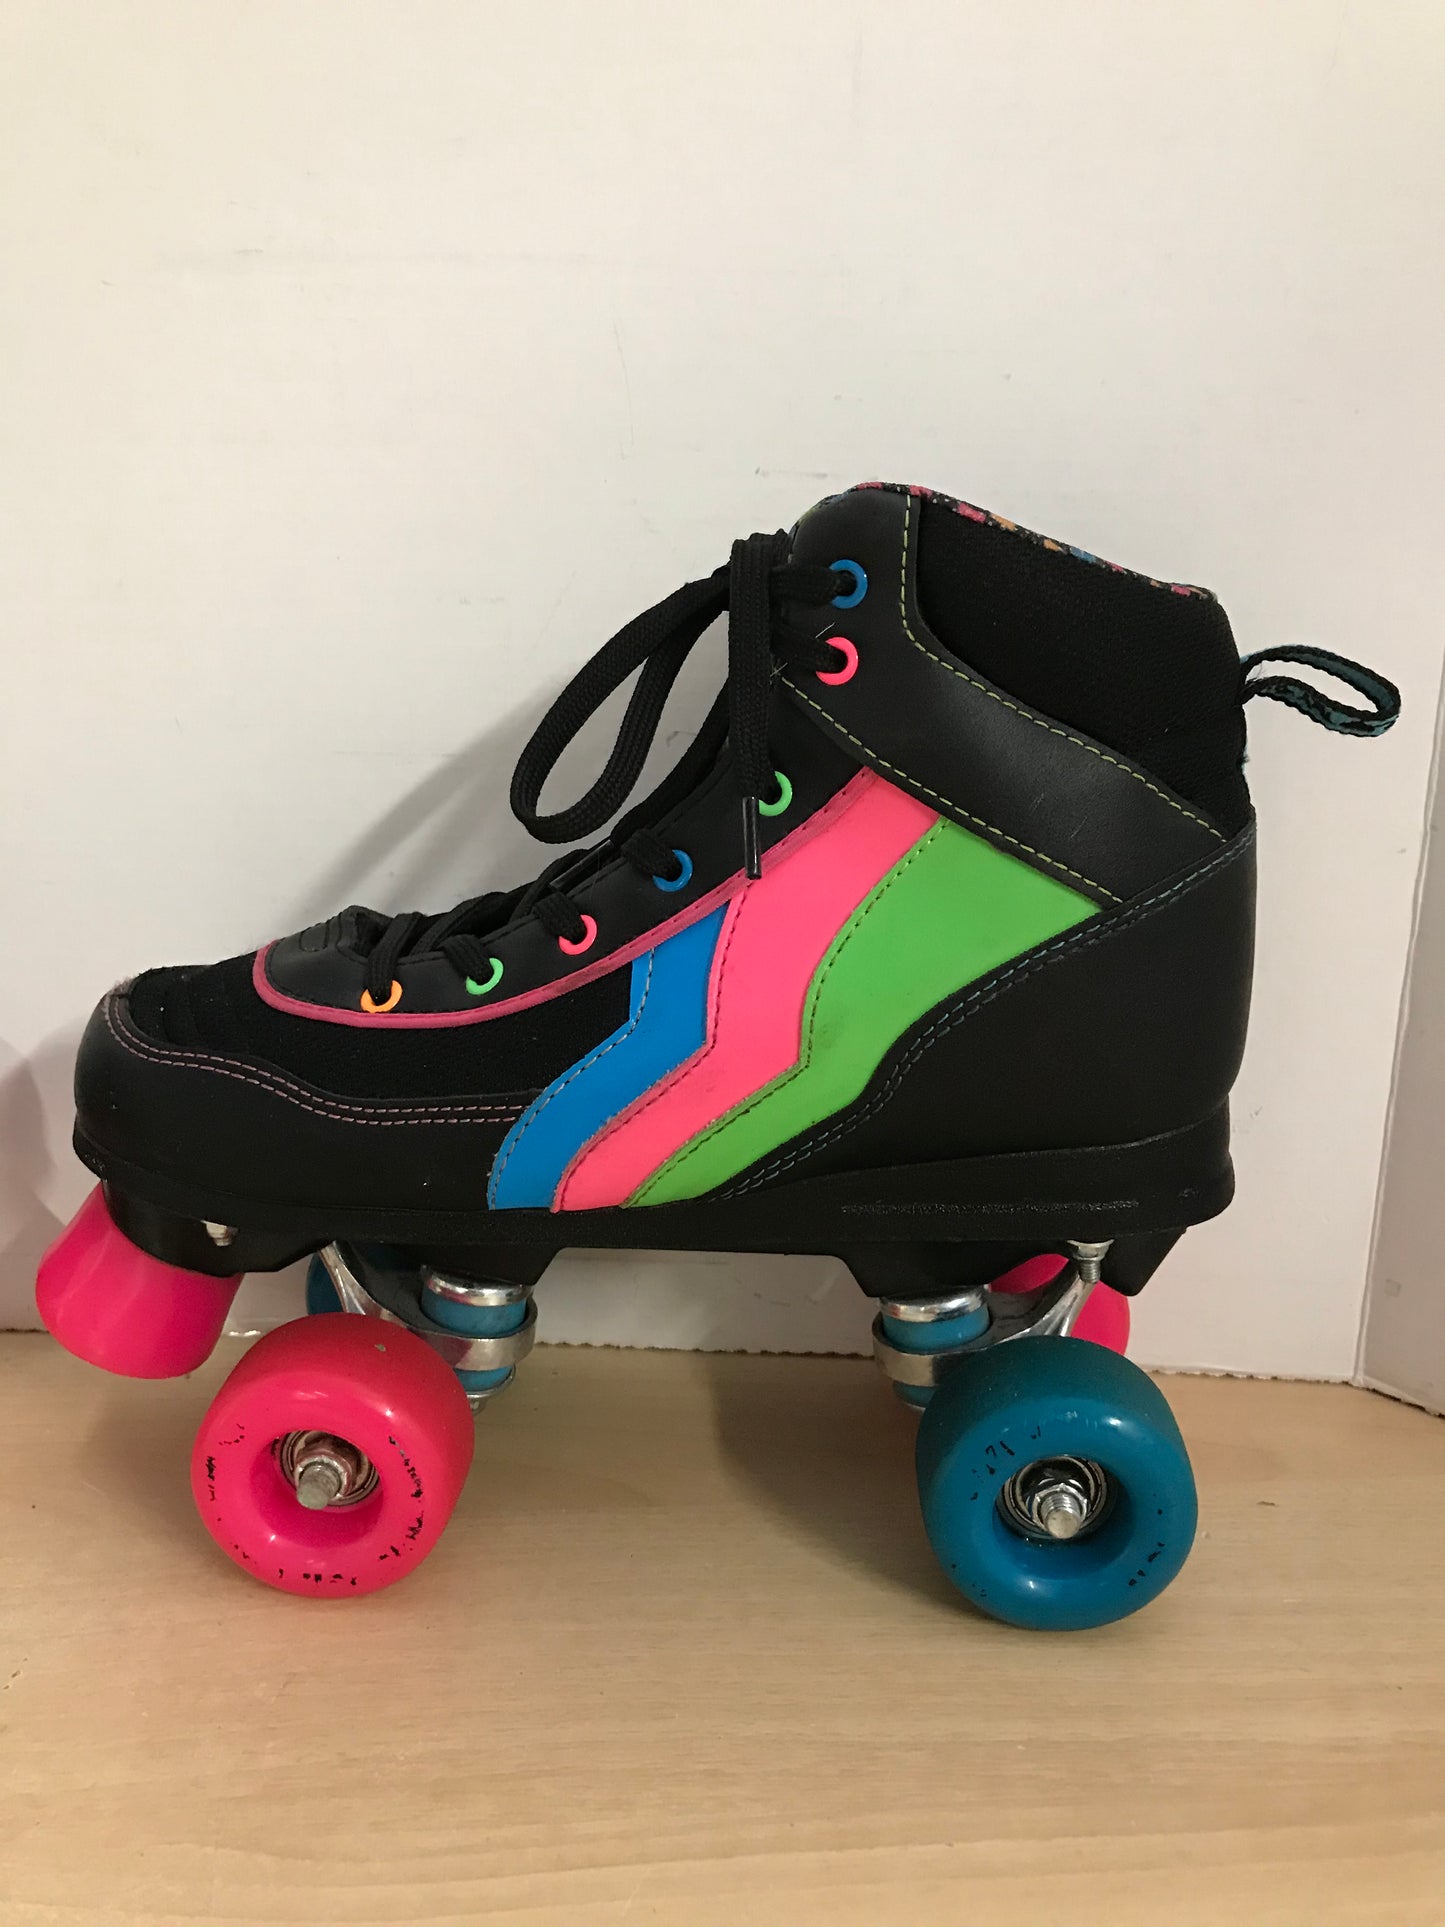 Inline Roller Skates Derby Ladies Size 8 Rio Roller Black Pink Multi Excellent